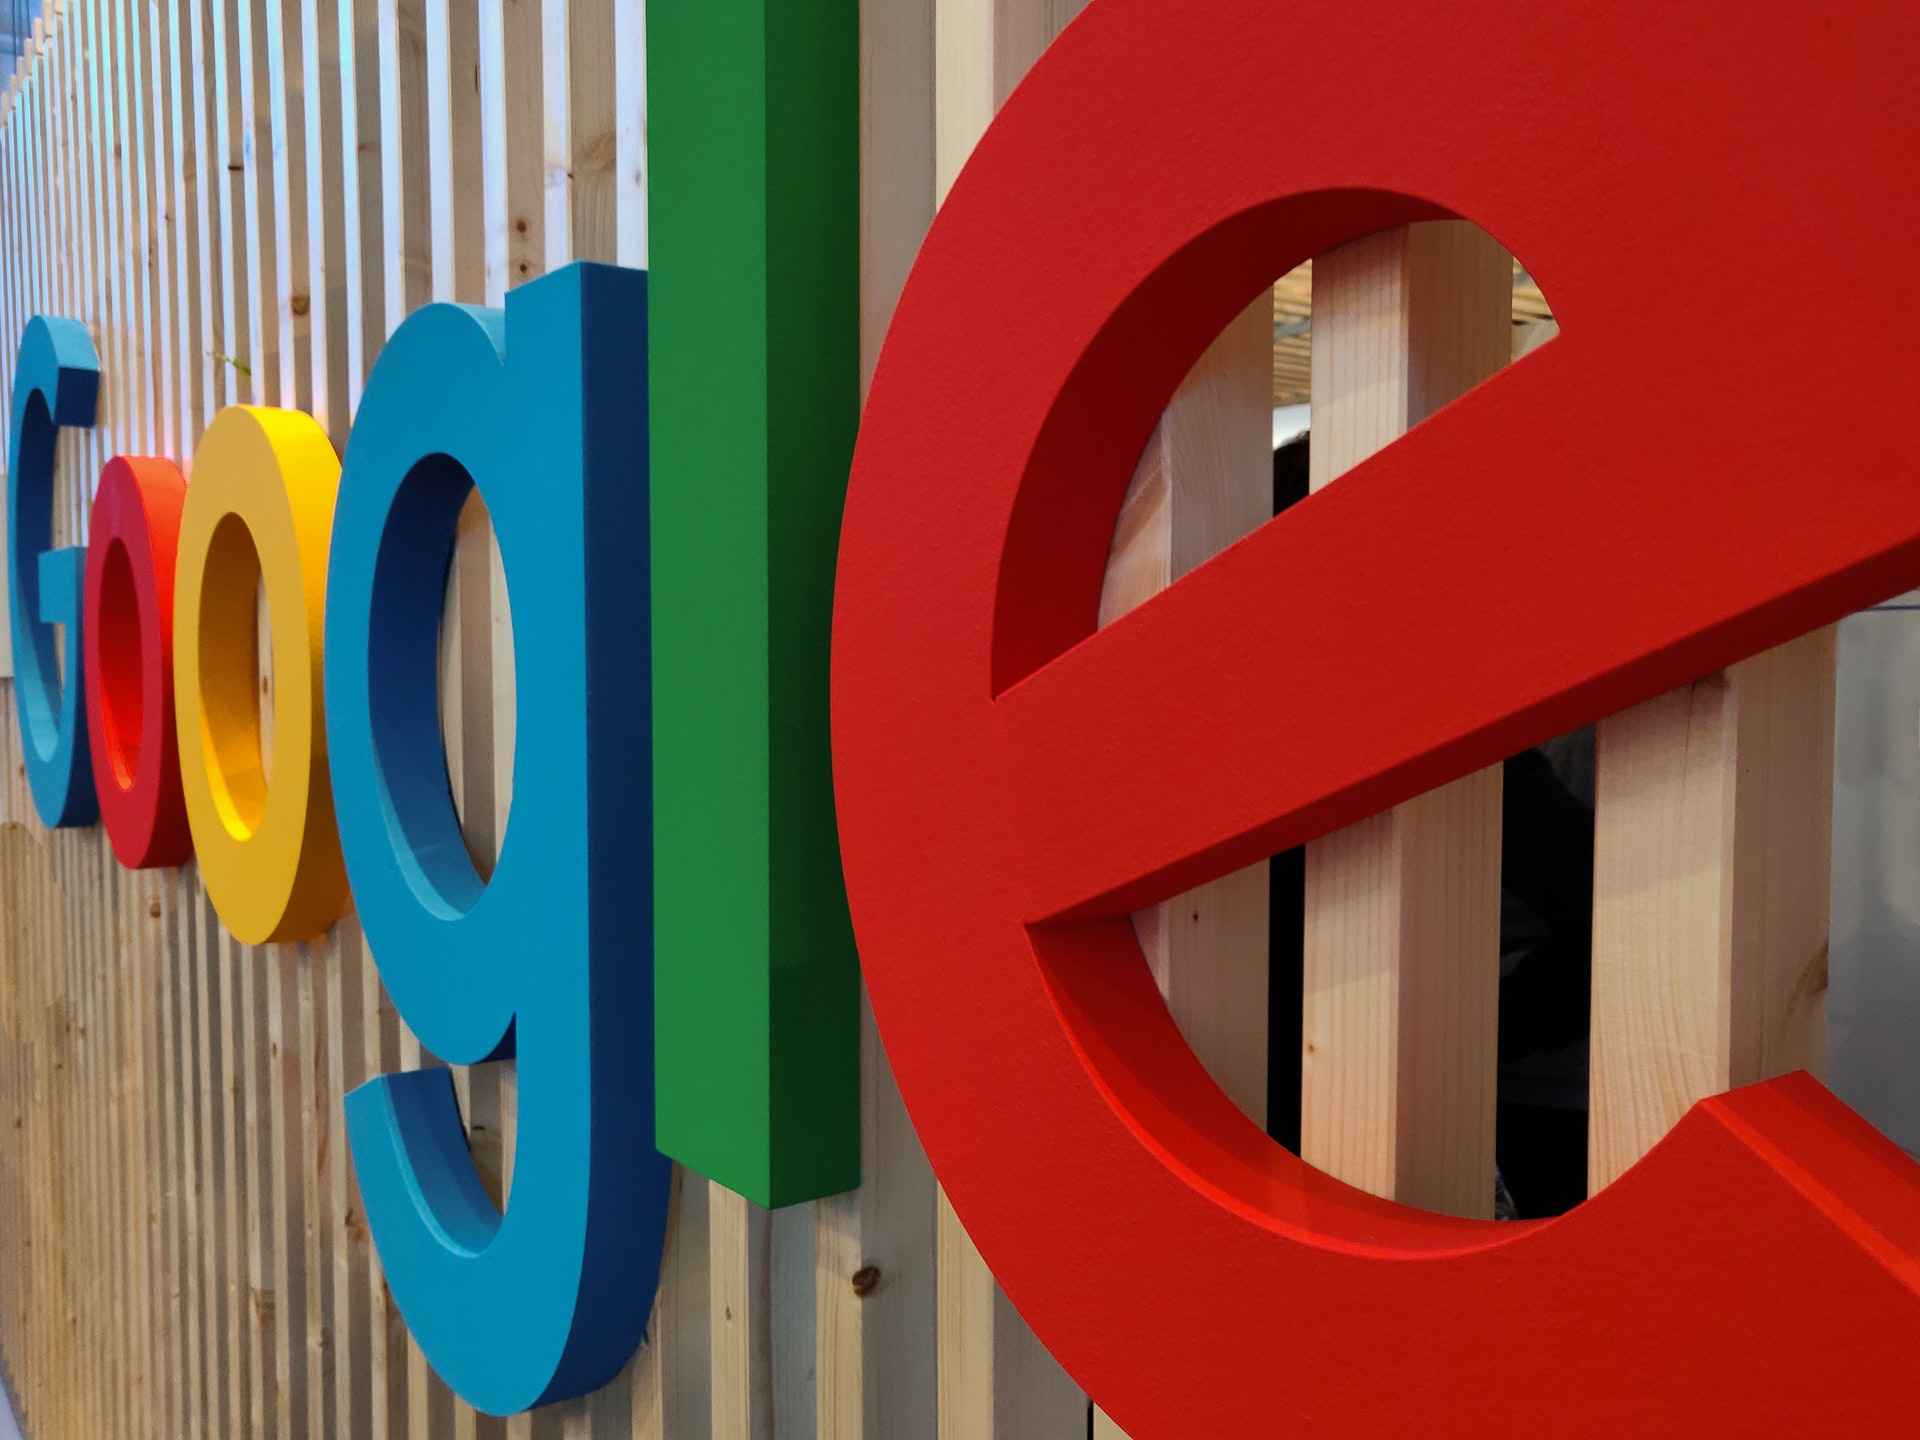 Google’s feud with Symantec